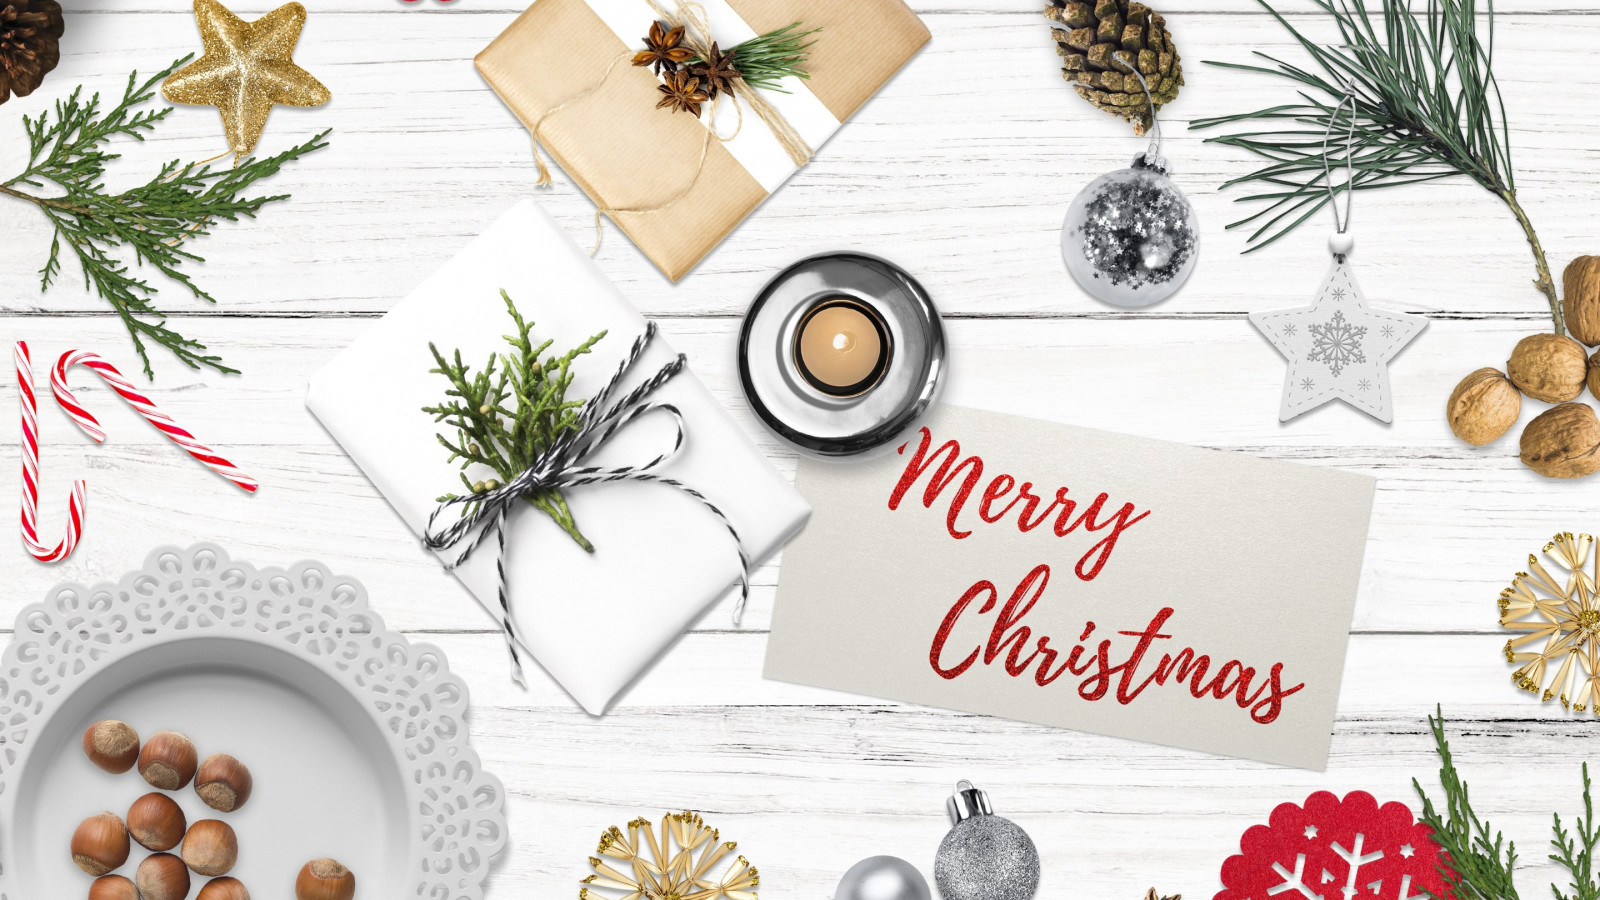 Download wallpaper: Merry Christmas 2019 1600x900